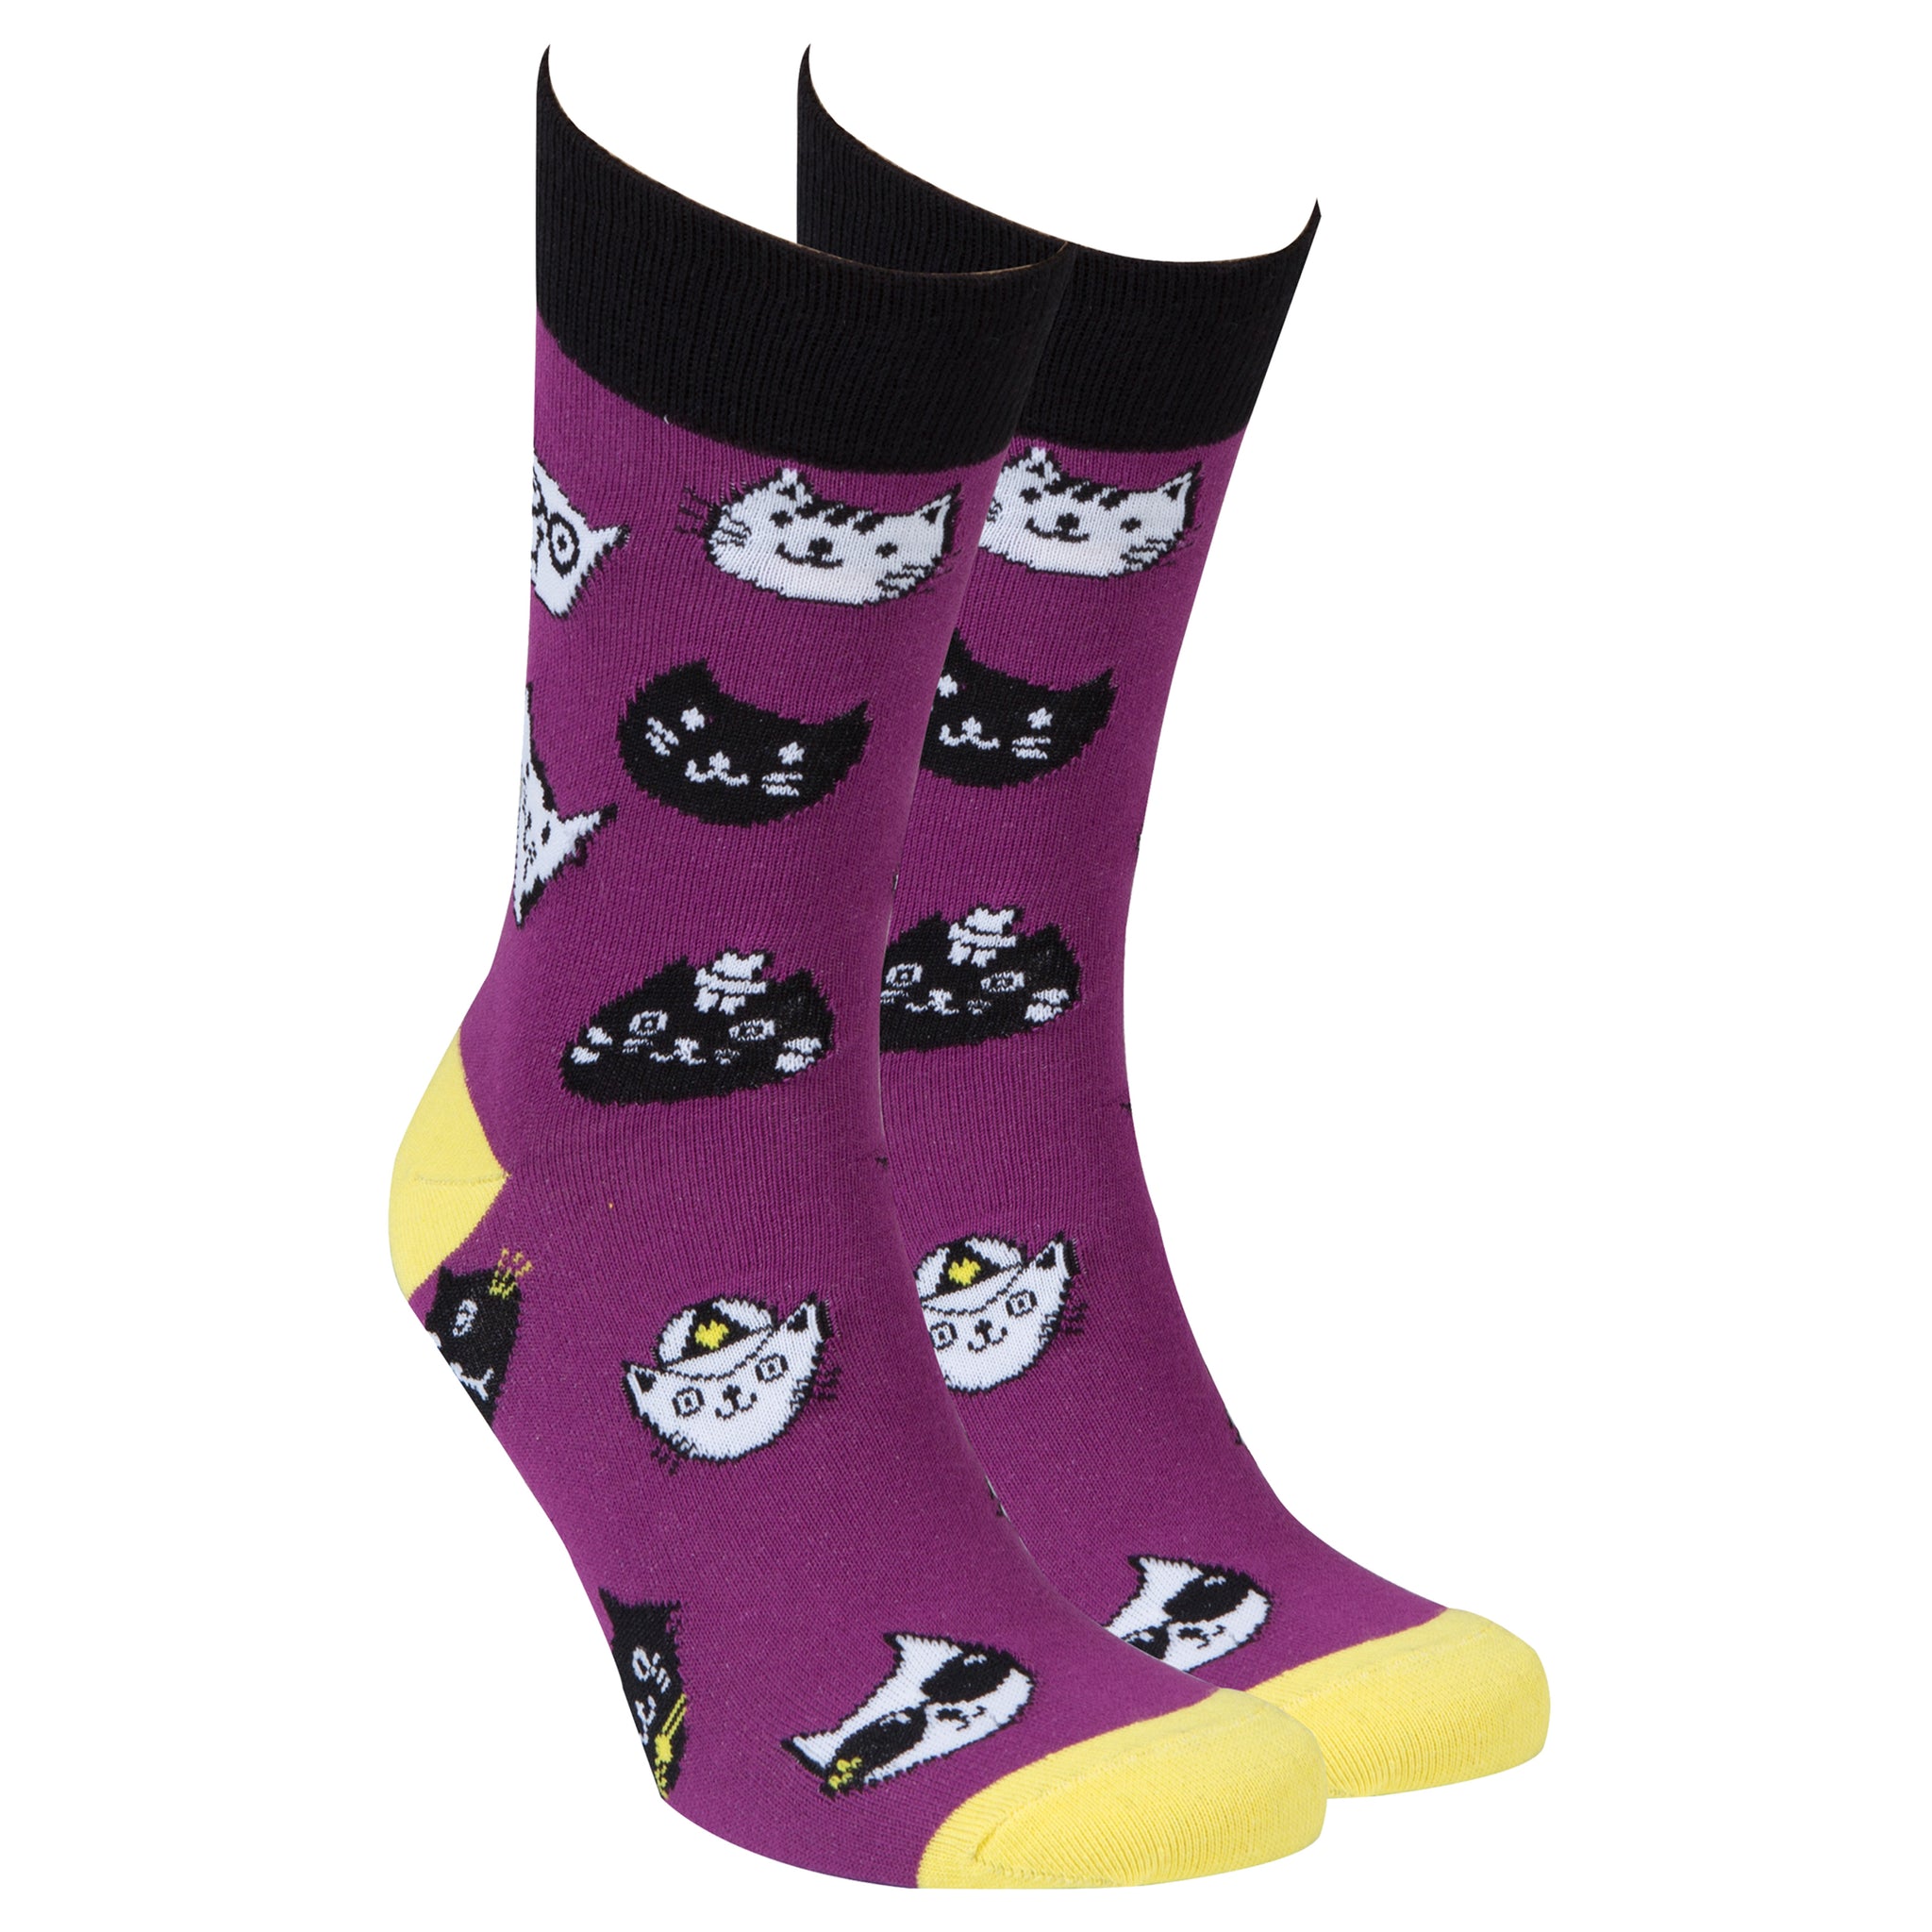 Men's Silly Cats Socks